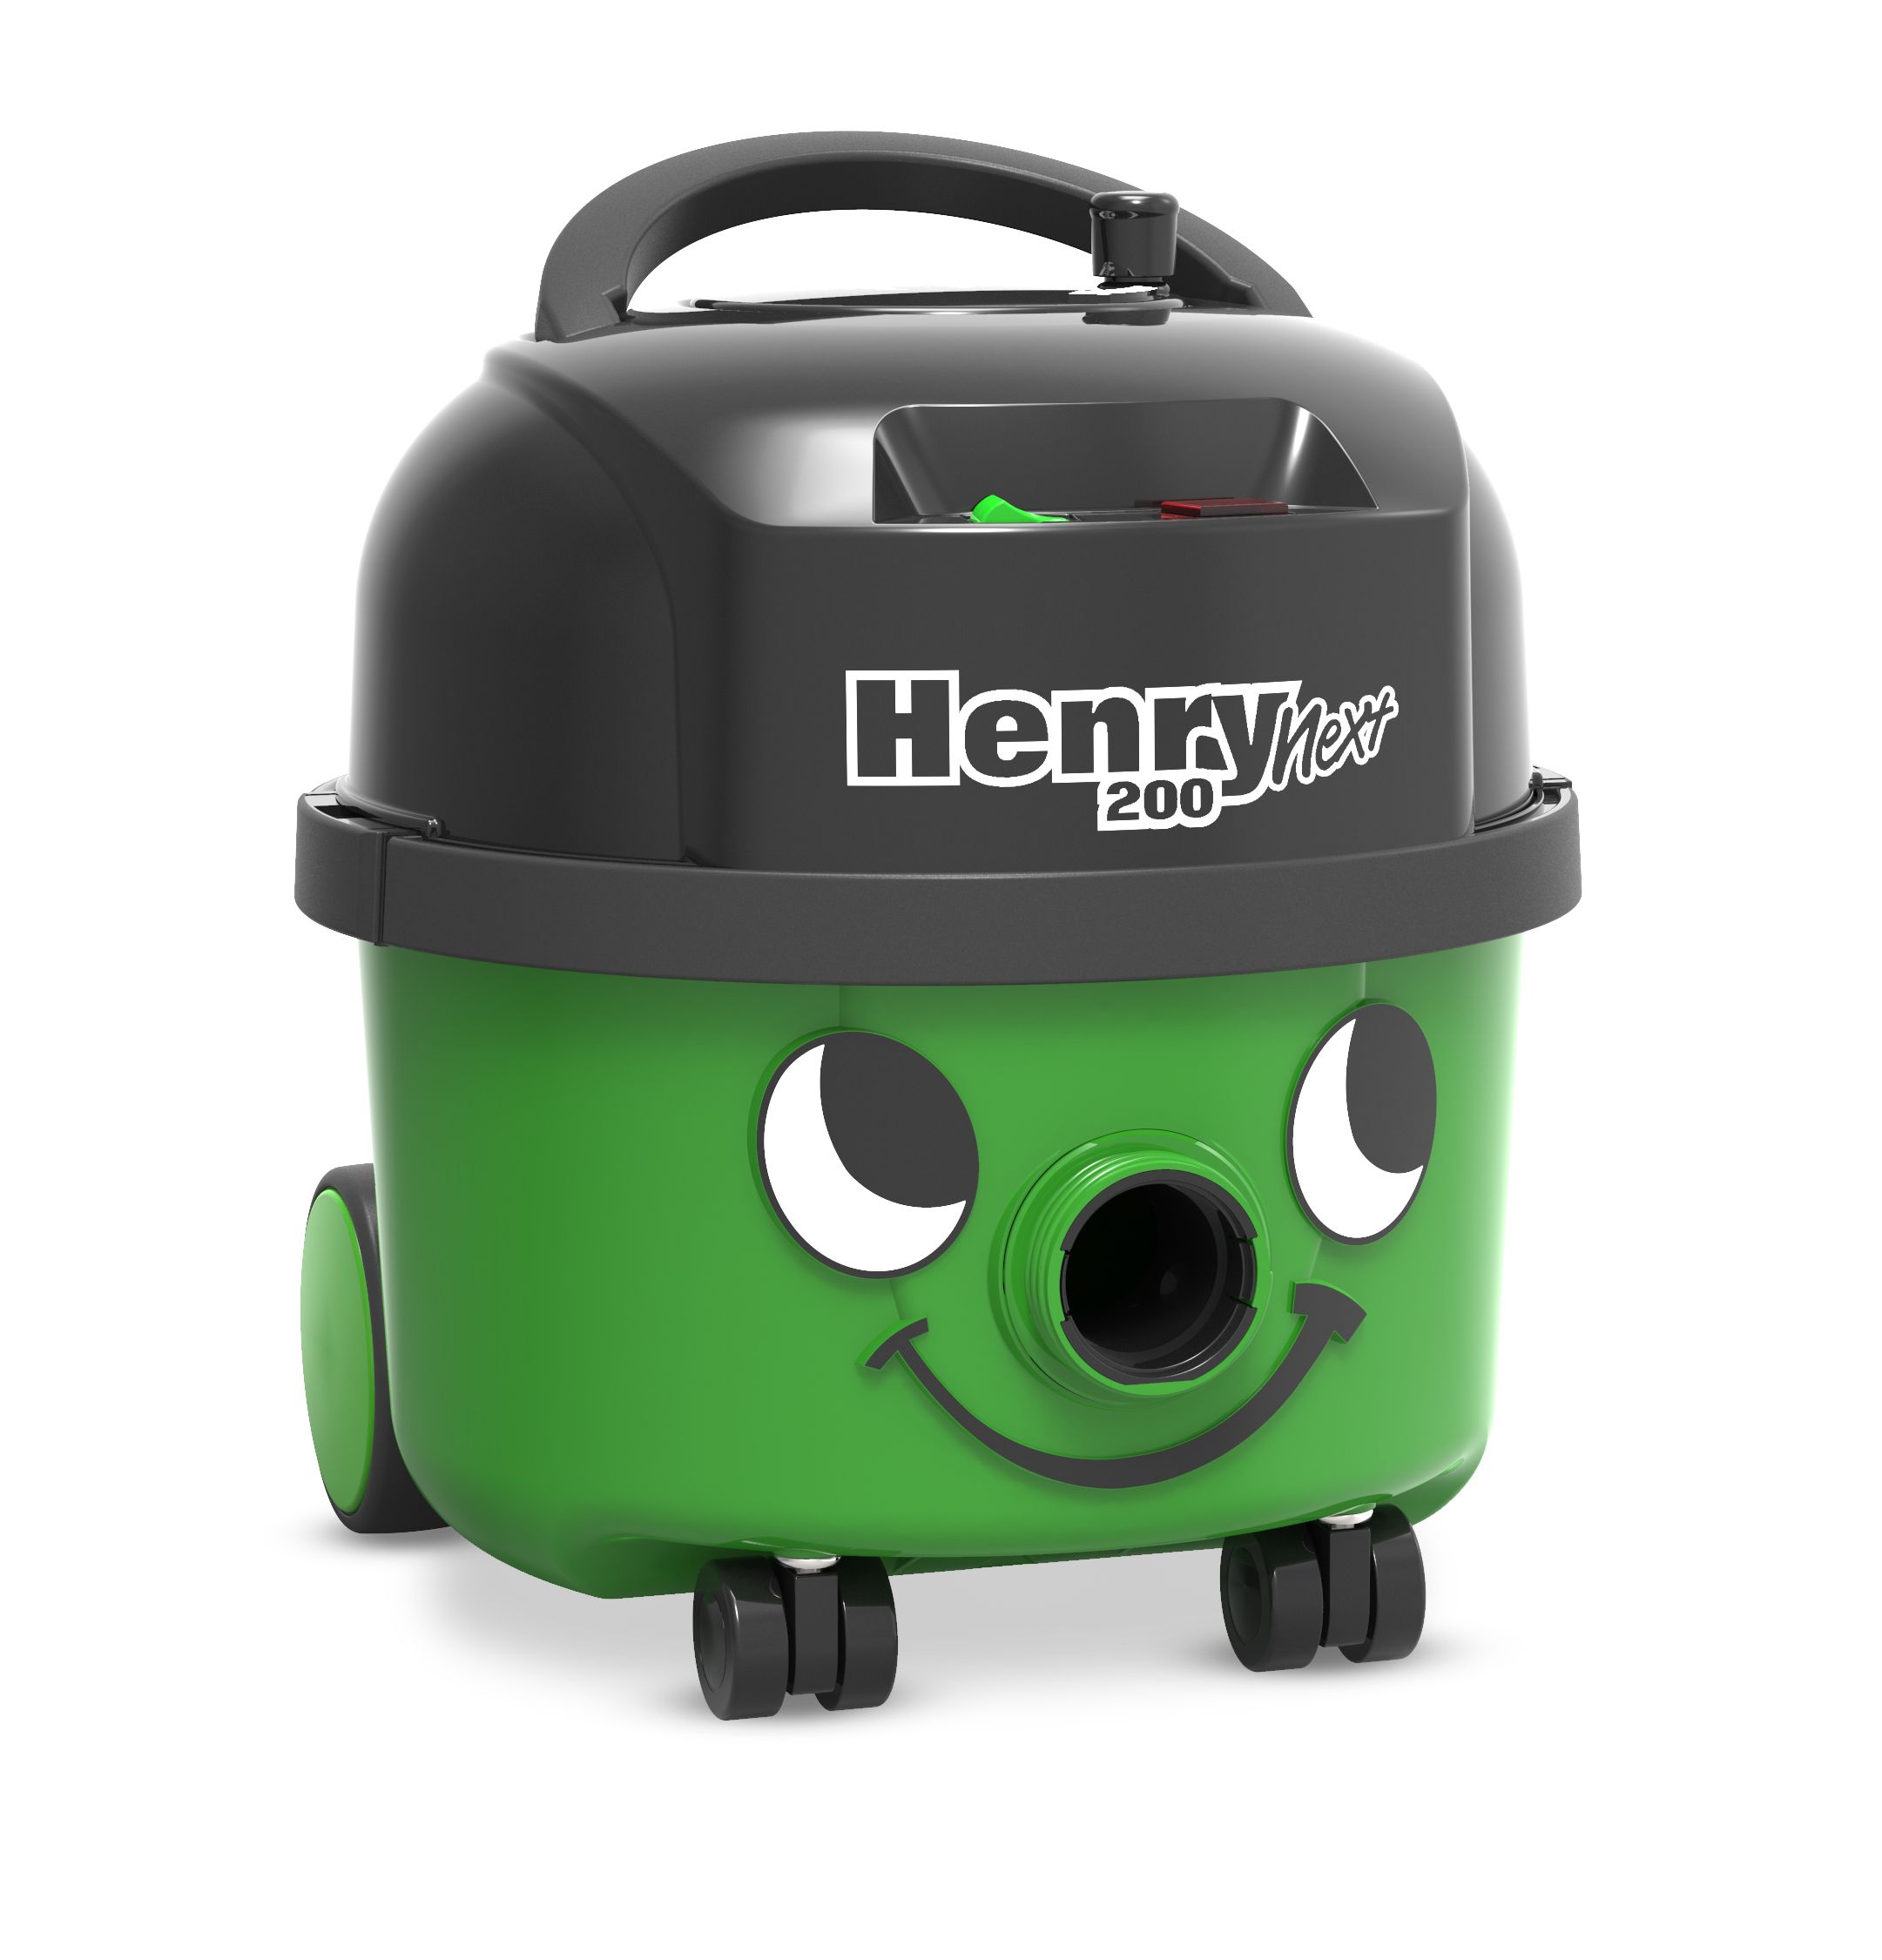 Augment Tussen zuigen Stofzuiger Henry Next HVN202-11 groen met kit AST0